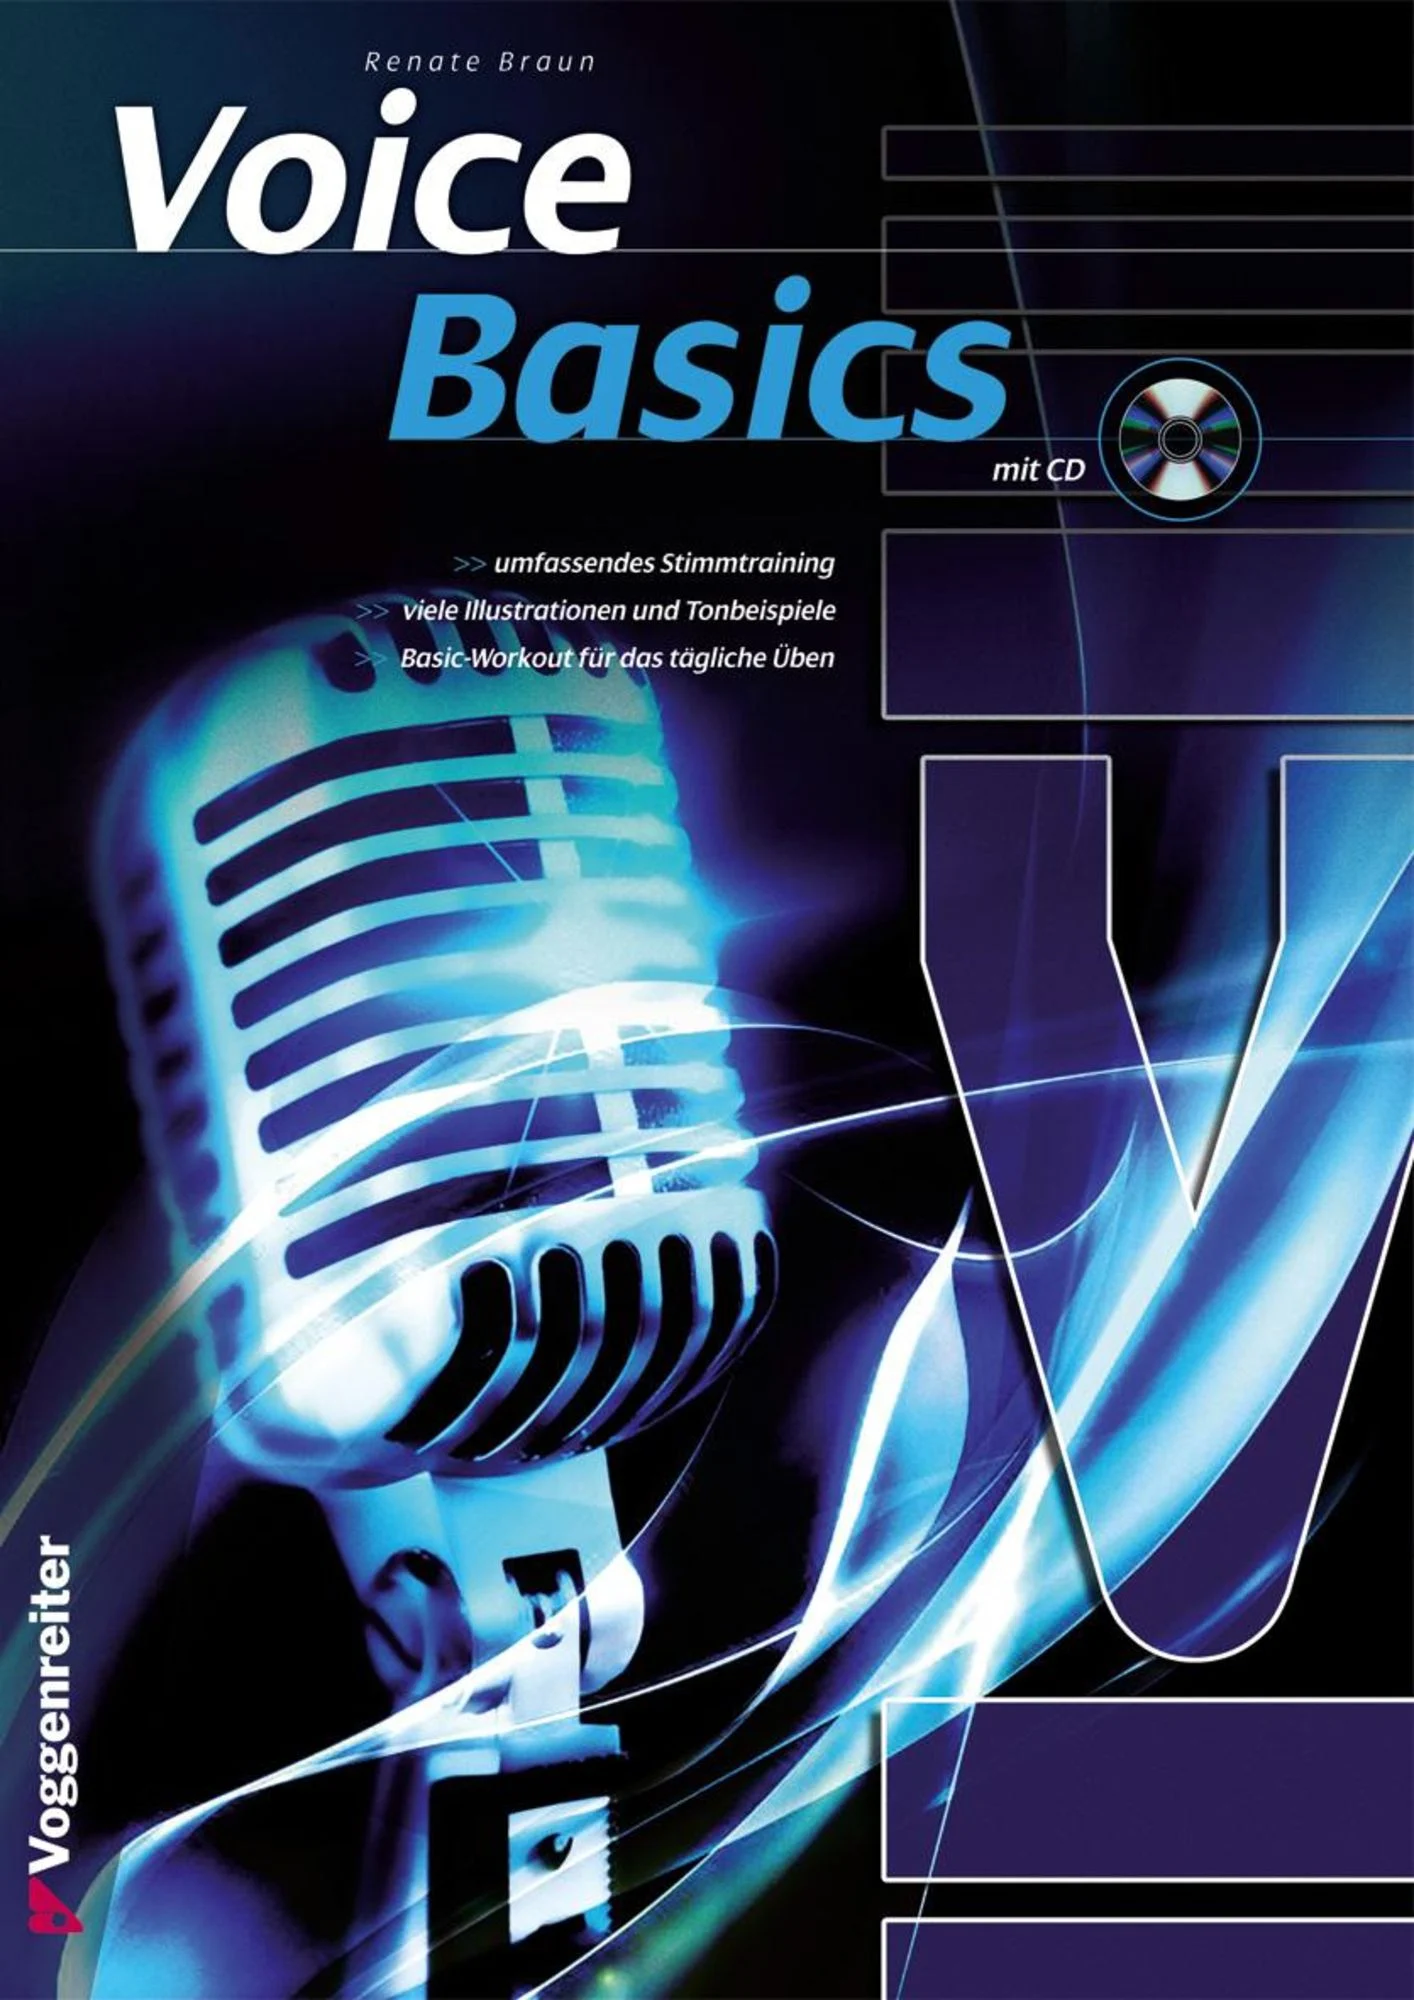 Voice Basics inkl. CD - Stimmentraining für Sänger